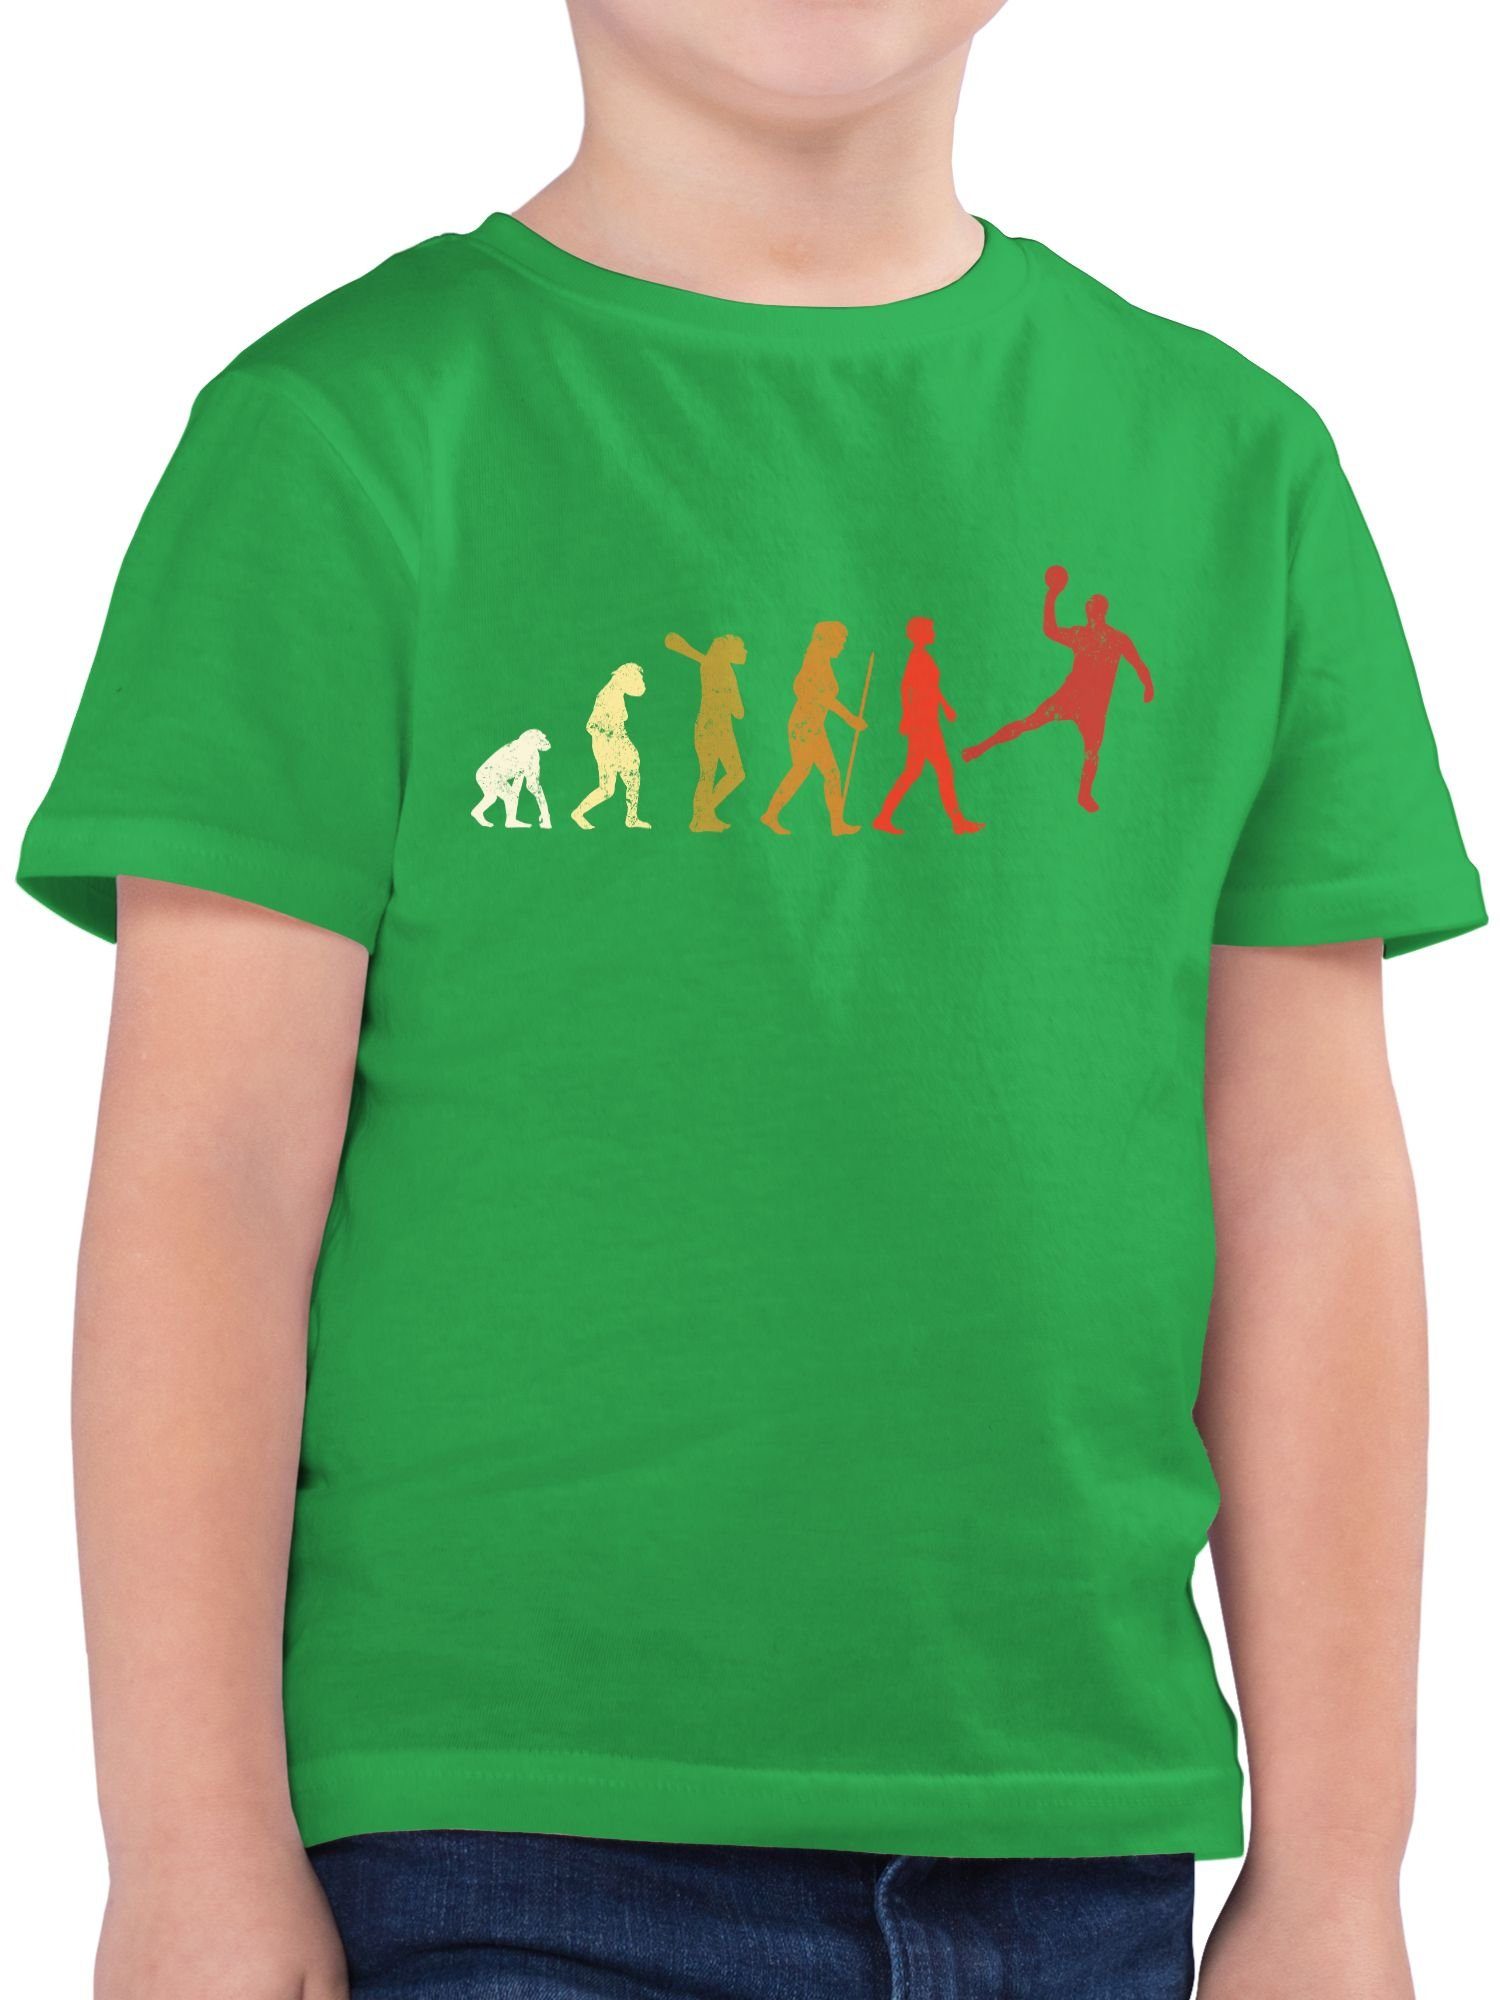 Vintage Evolution Kinder 3 Kleidung Grün Male T-Shirt Sport Handball Shirtracer